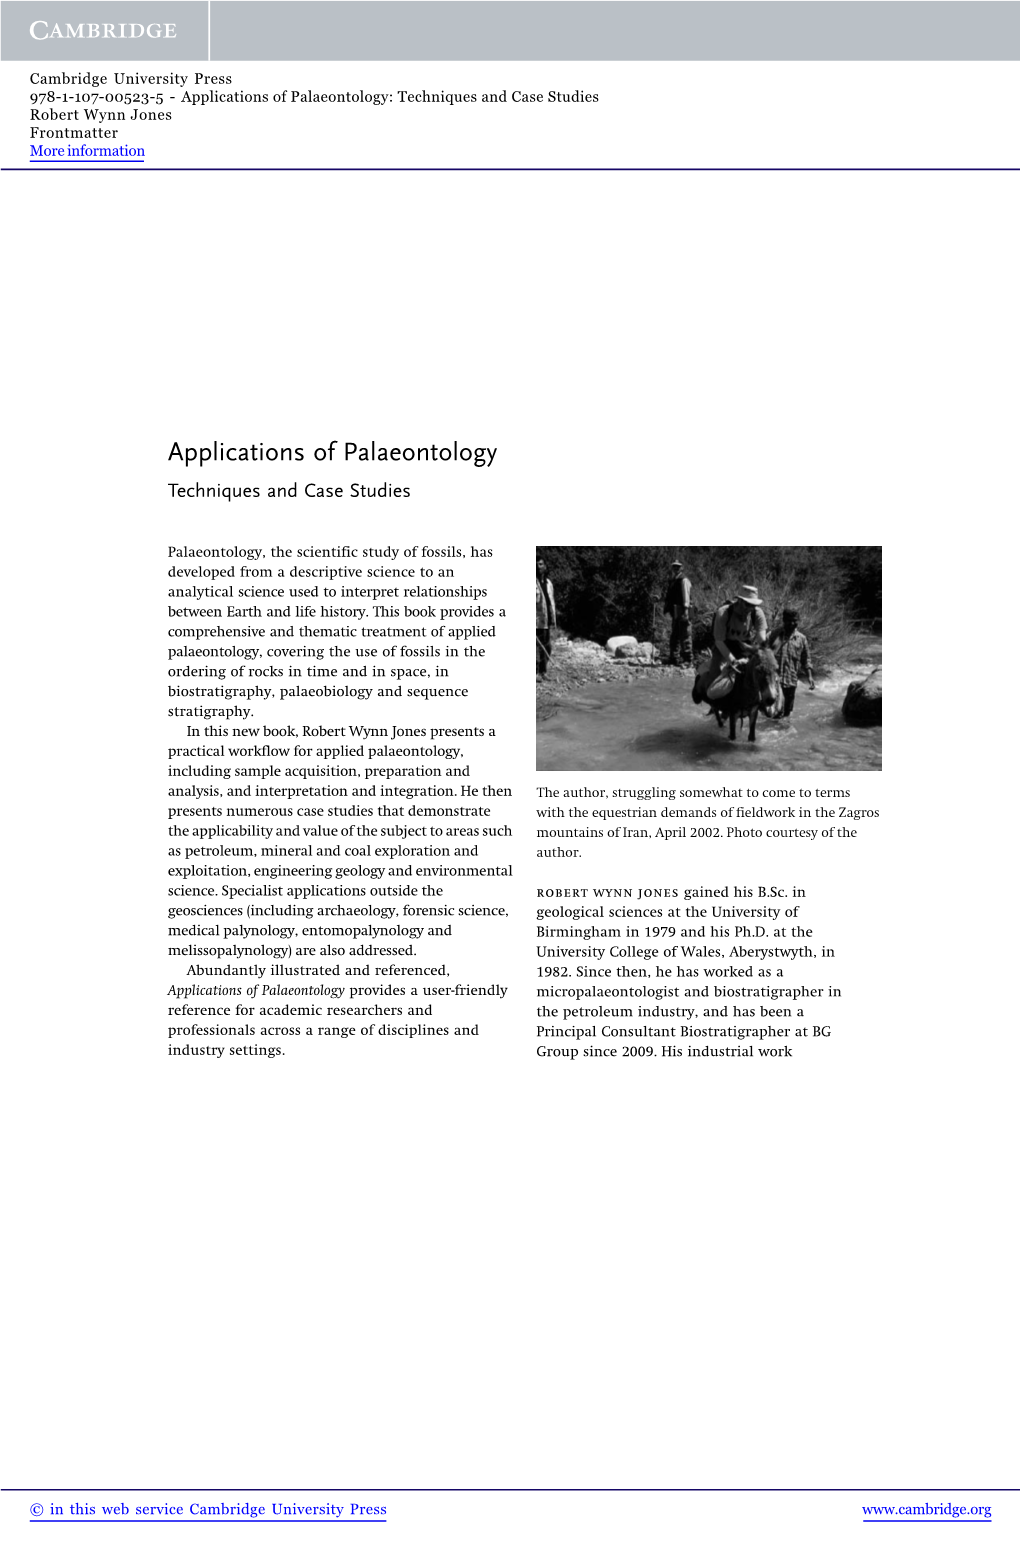 Applications of Palaeontology: Techniques and Case Studies Robert Wynn Jones Frontmatter More Information